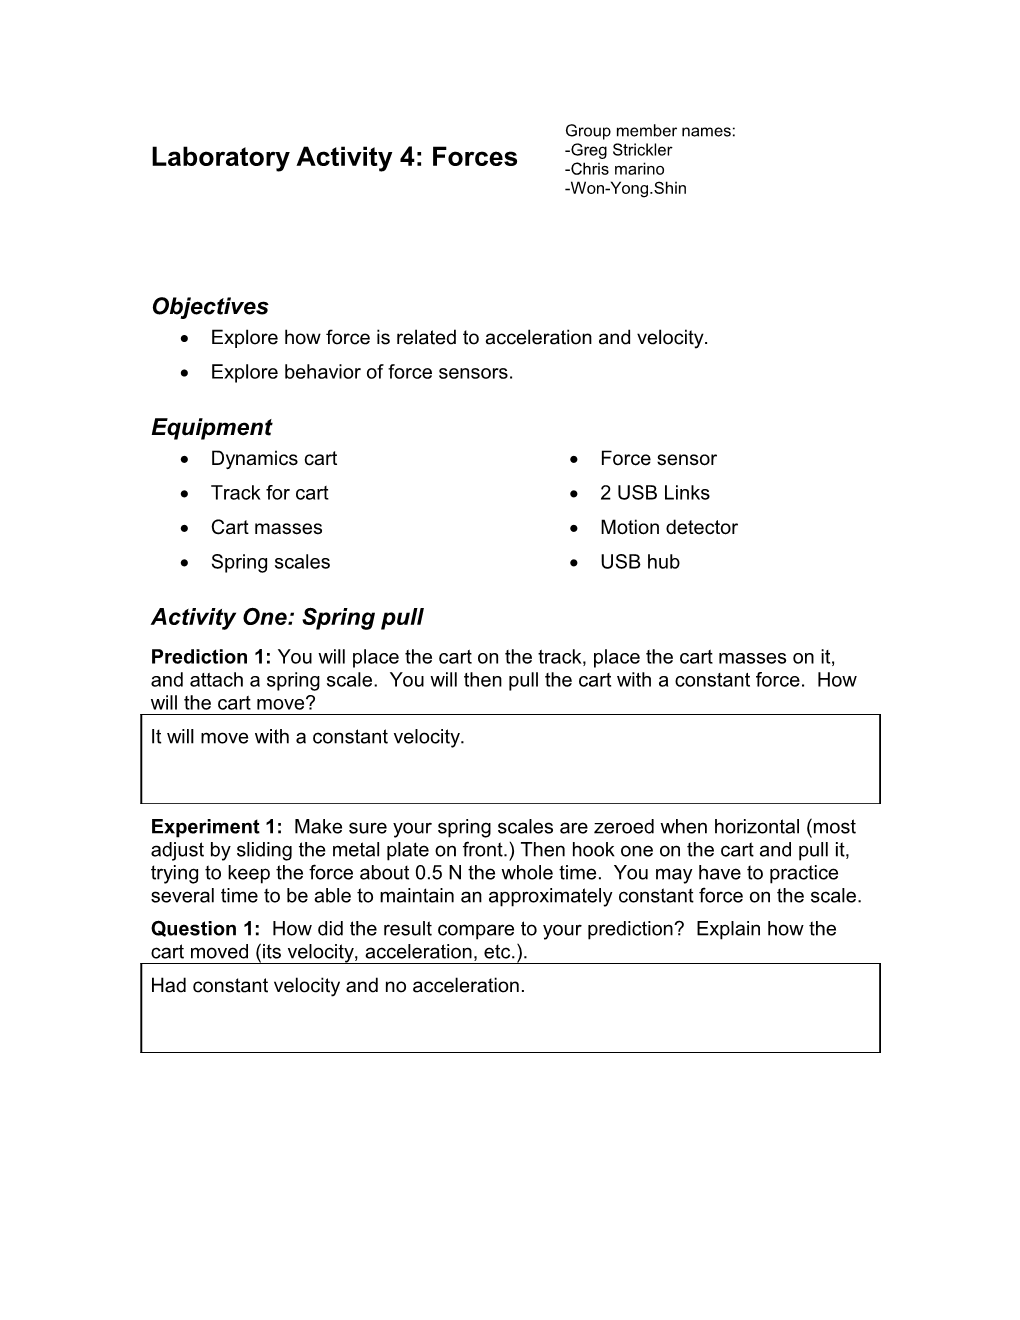 Laboratory Activity 1: Position Graphs